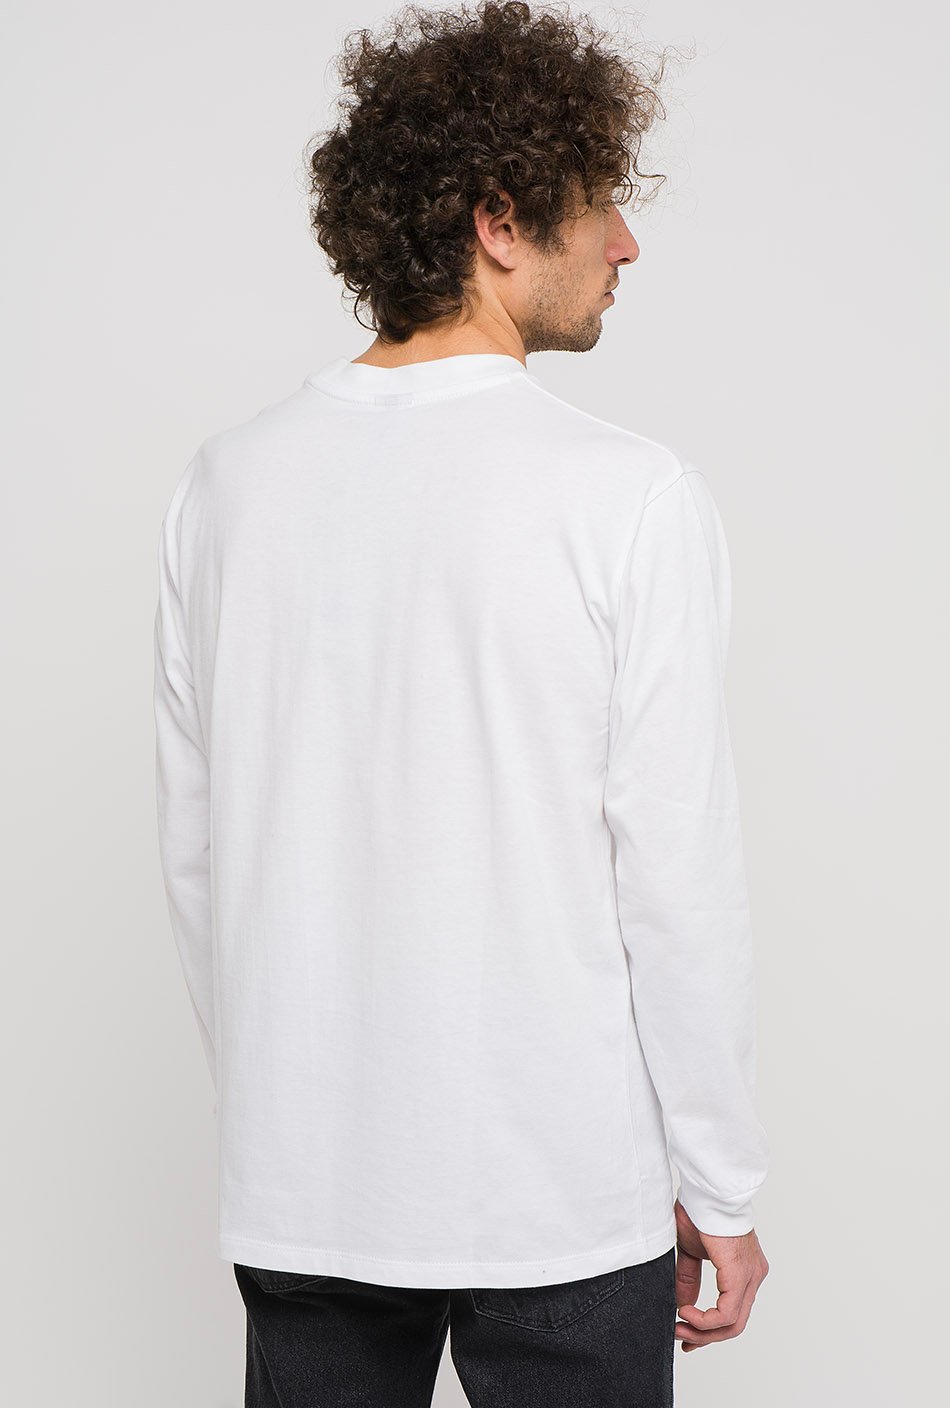 T-shirt Creation Blanc